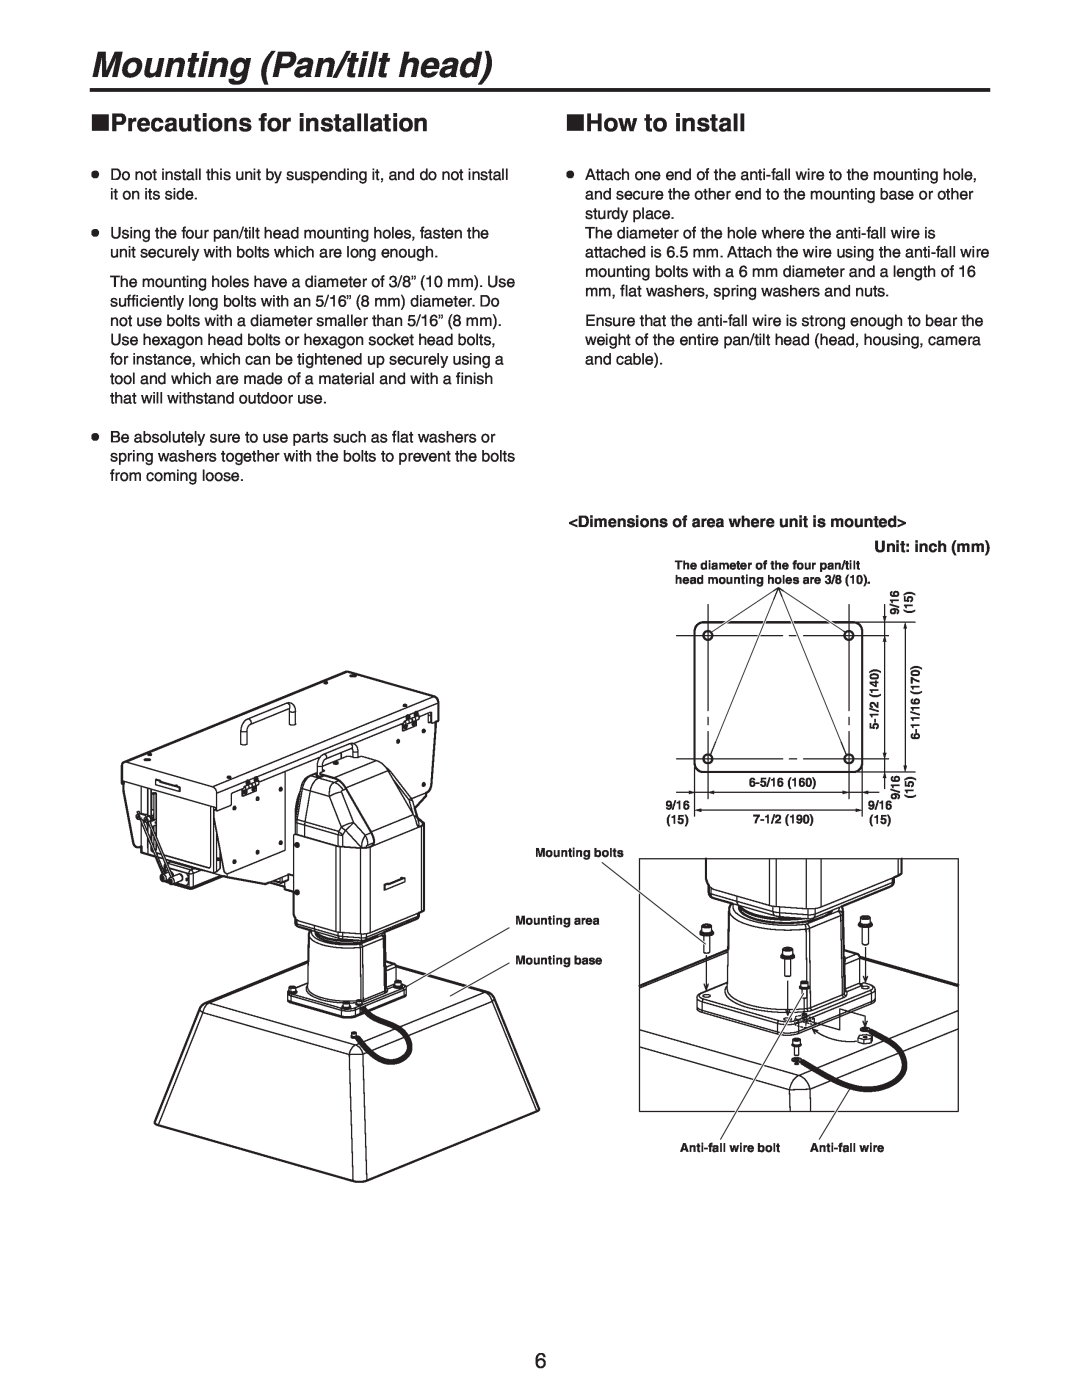 Panasonic AW-PH650N manual Mounting Pan/tilt head, Precautions for installation, How to install 